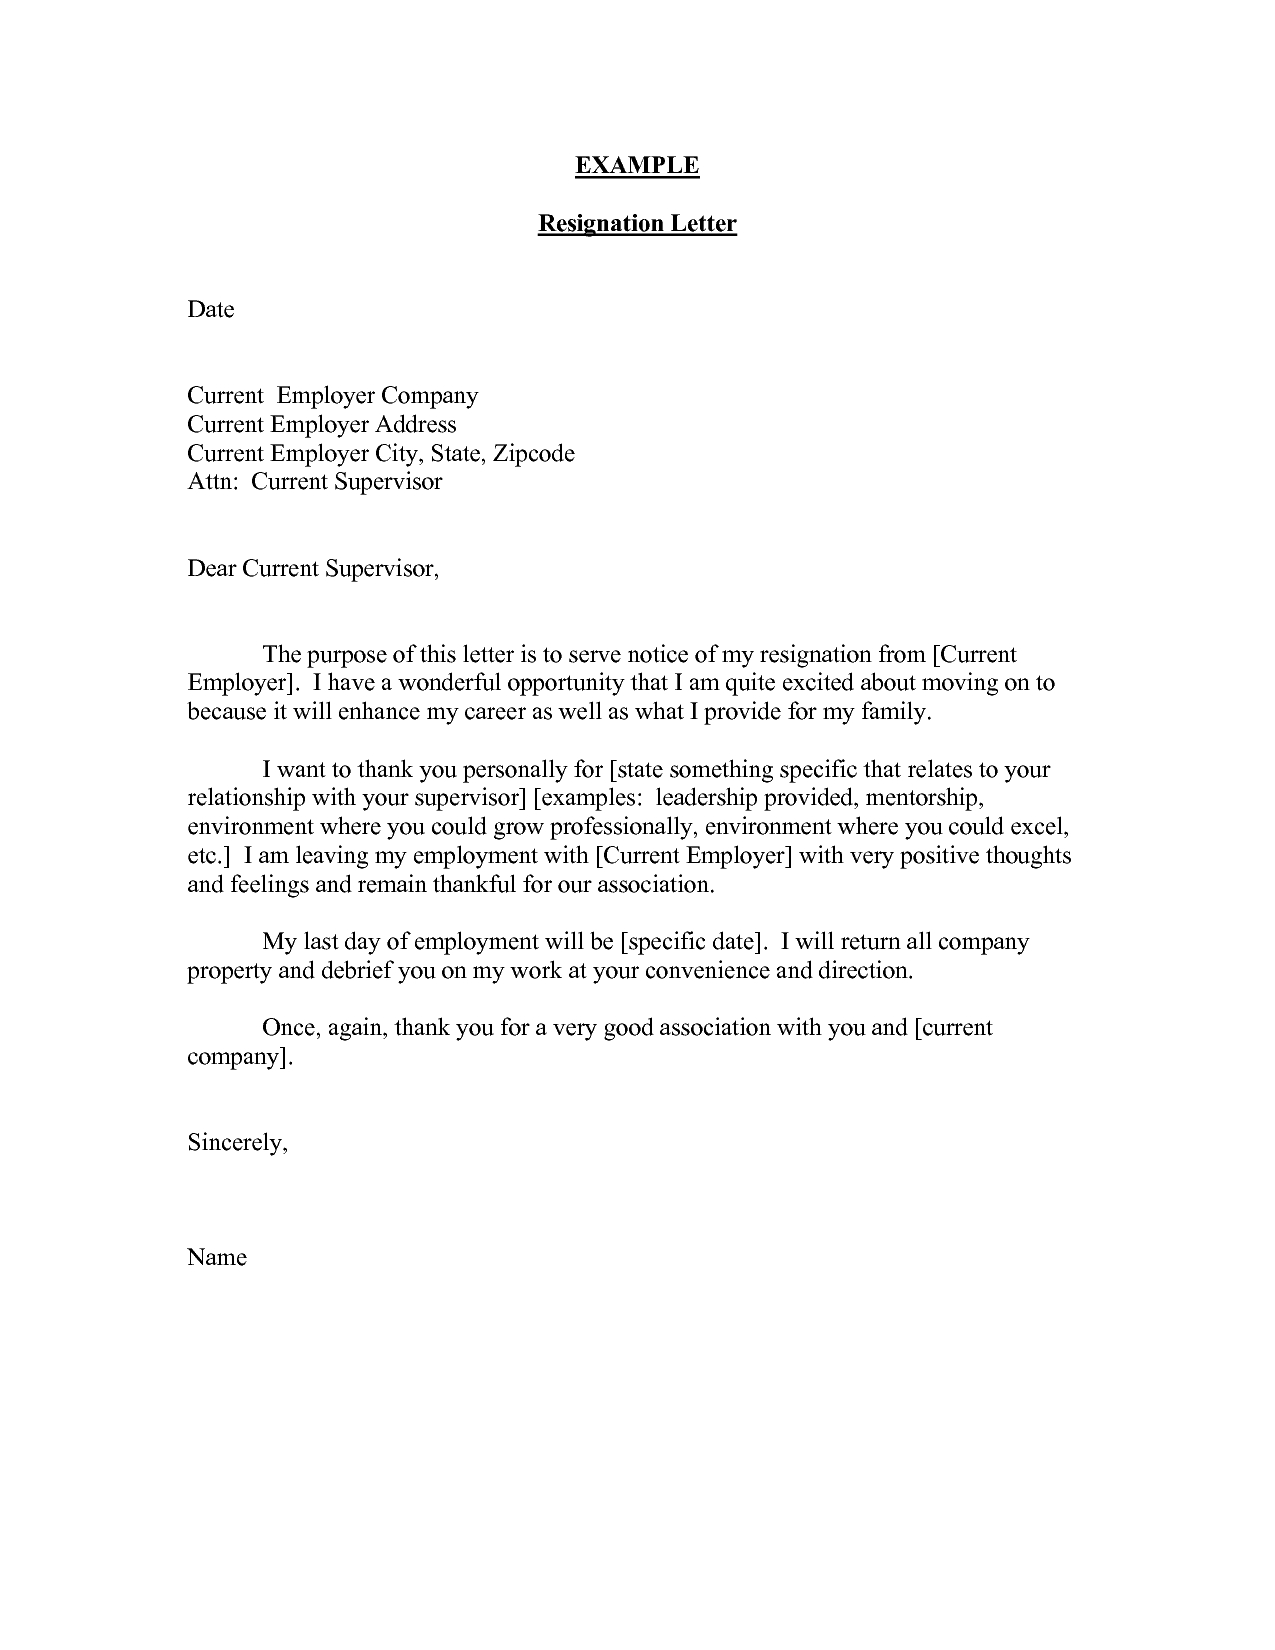 Resignation Letter format Template - Resignation Letter Sample Doc Resume and Letter Samplewriting A